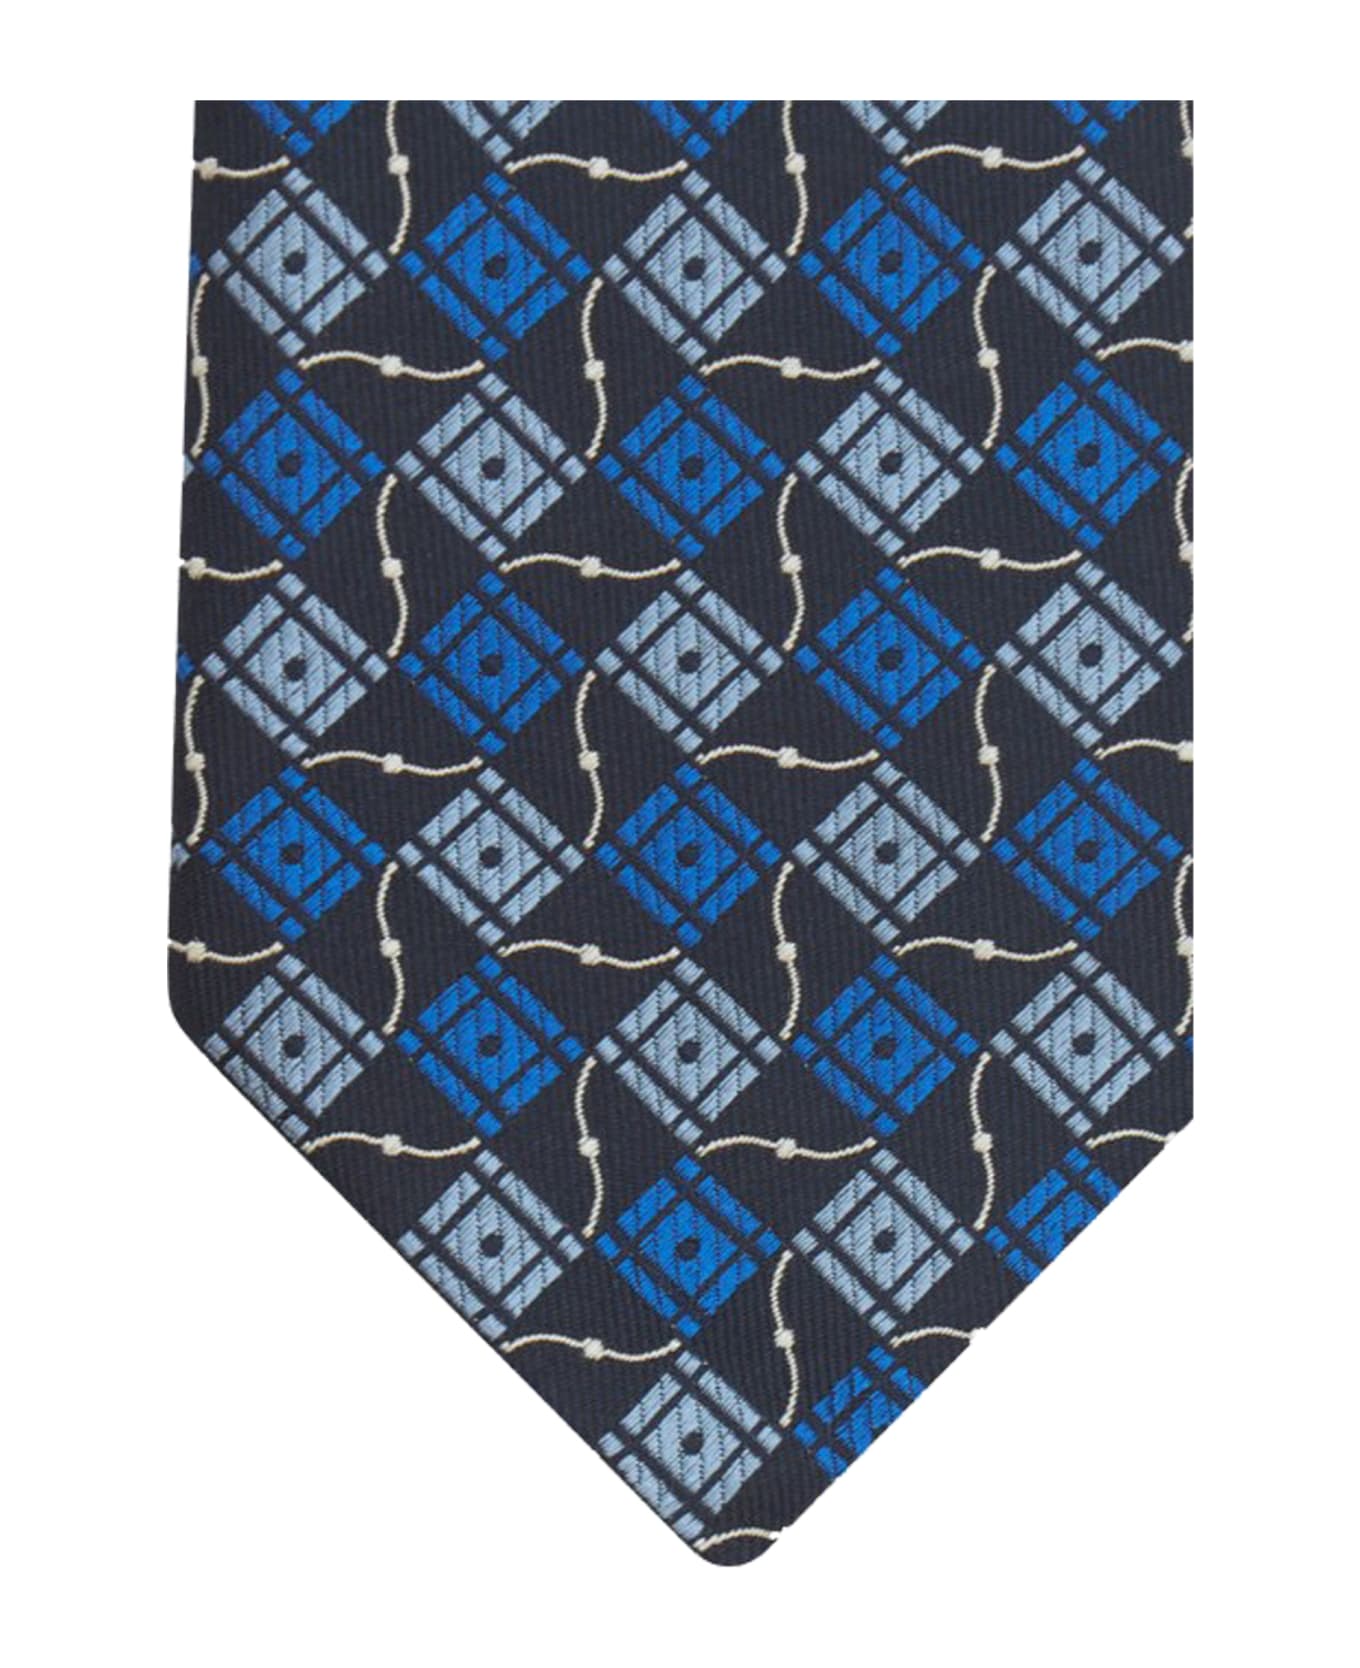 Etro 8 Cm Tie - Blue ネクタイ